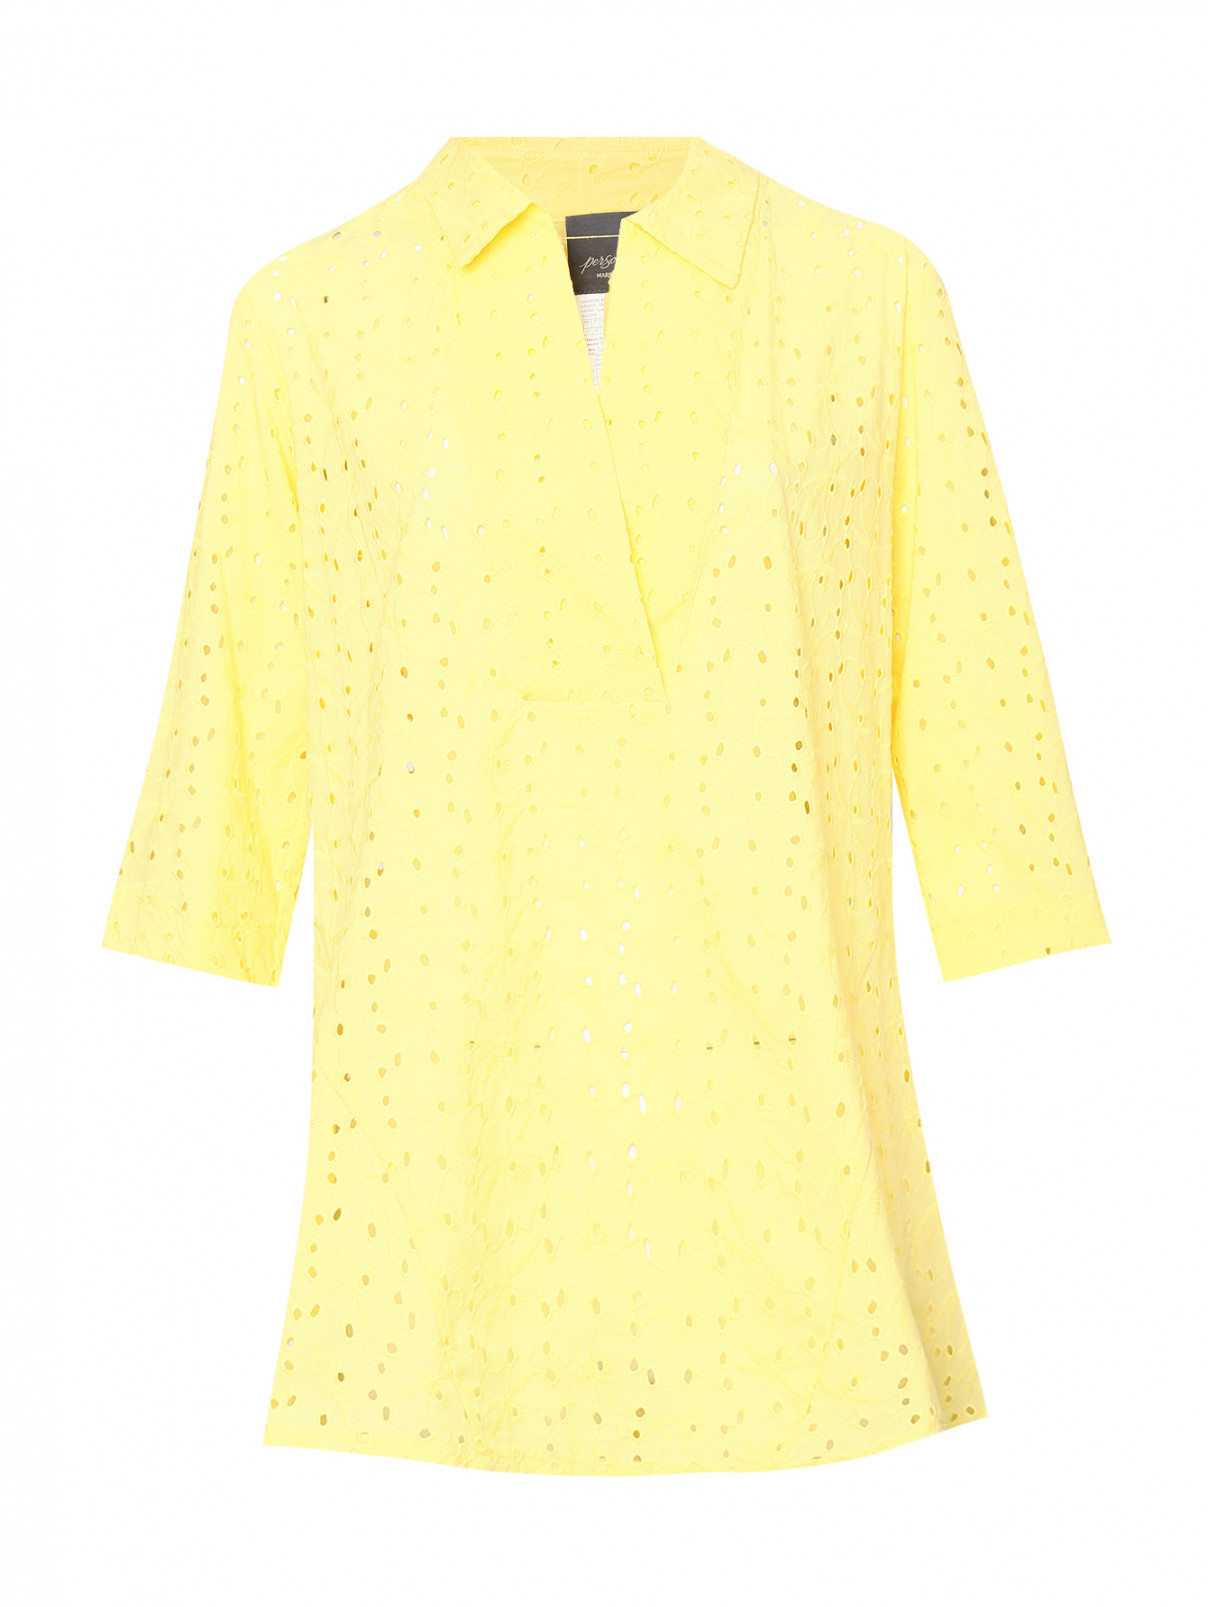 Блуза из хлопка с вышивкой Persona by Marina Rinaldi  –  Общий вид  – Цвет:  Желтый